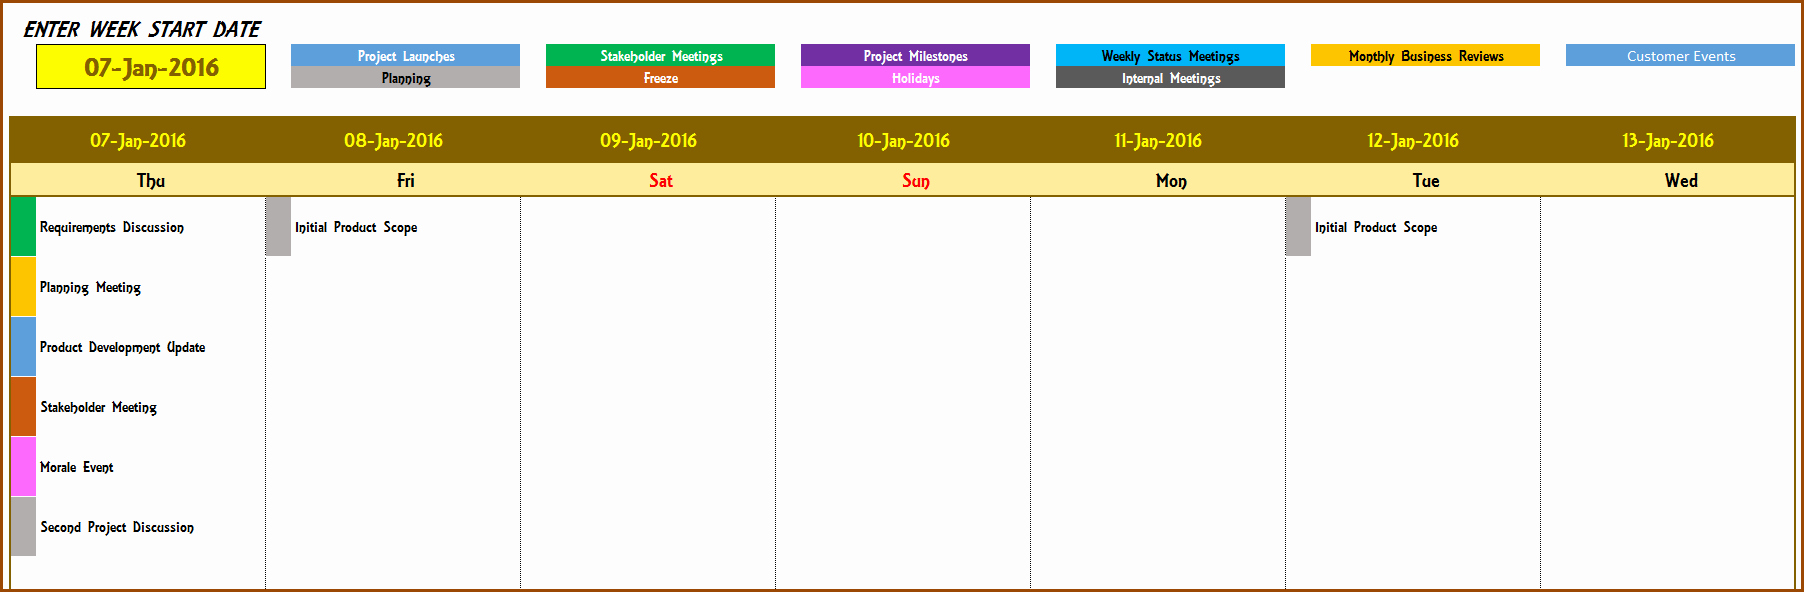 Calendar Of events Template 2015 Fresh event Calendar Maker Excel Template V3 Support